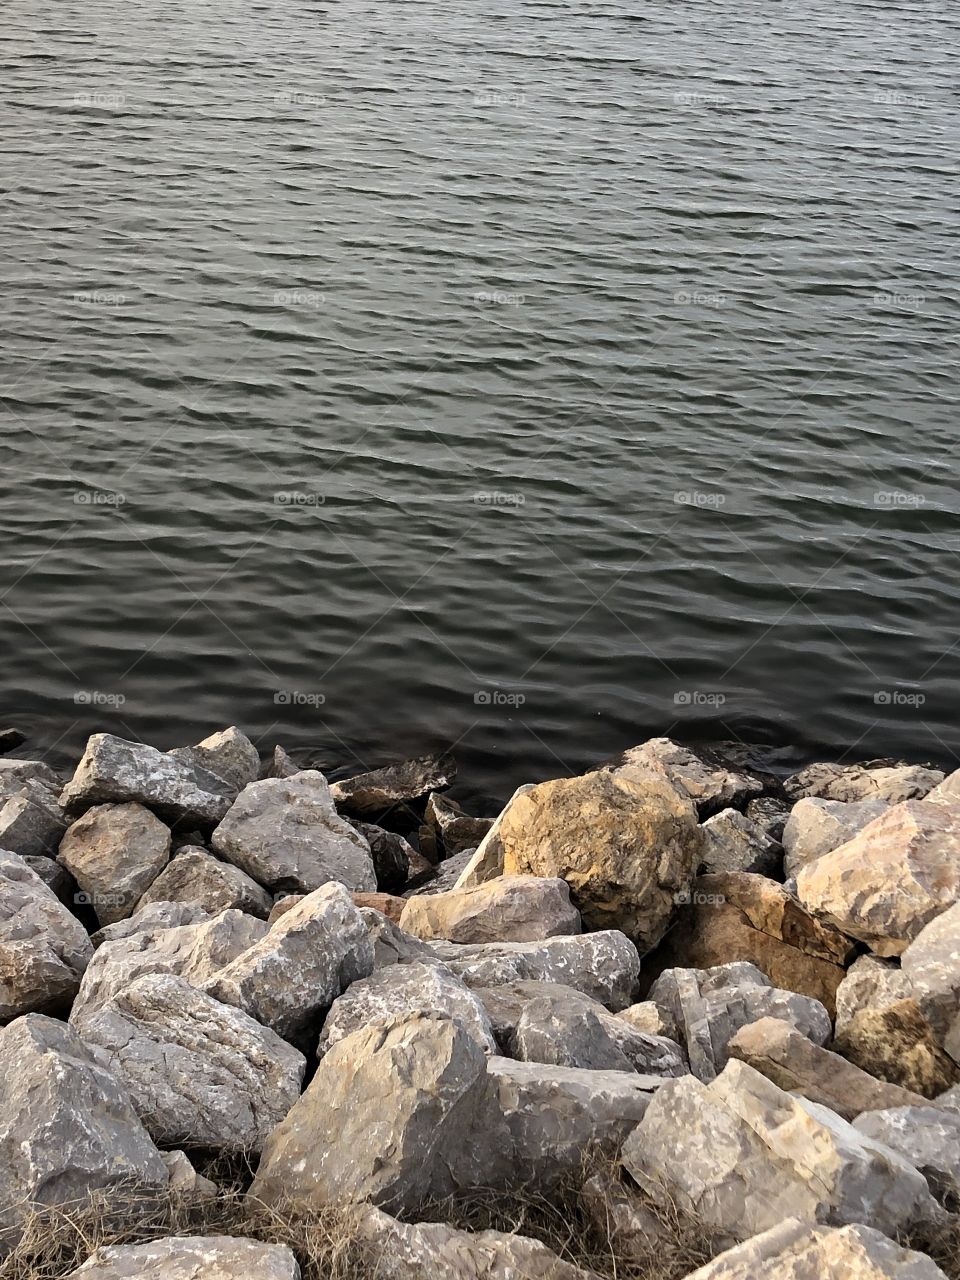 Rocks by the shoreline at a lake